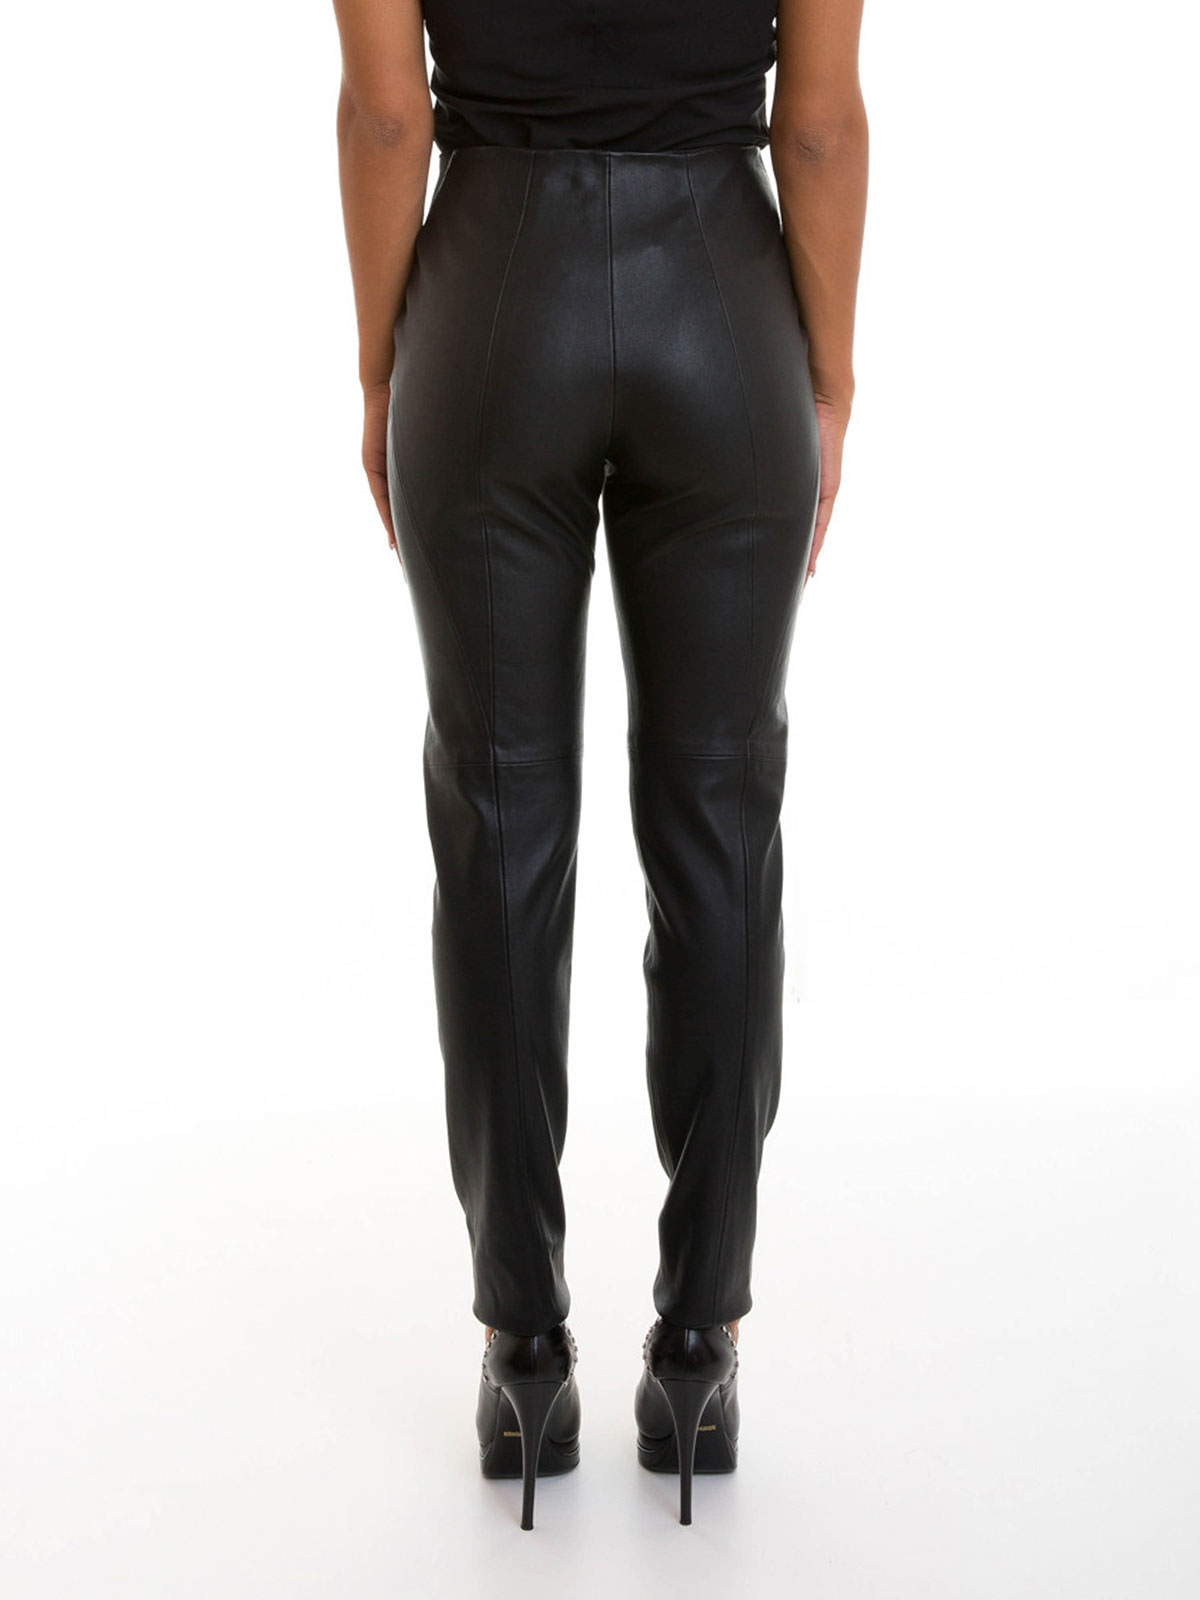 Armani Exchange Zipper Leather Pants for Women  Mercari